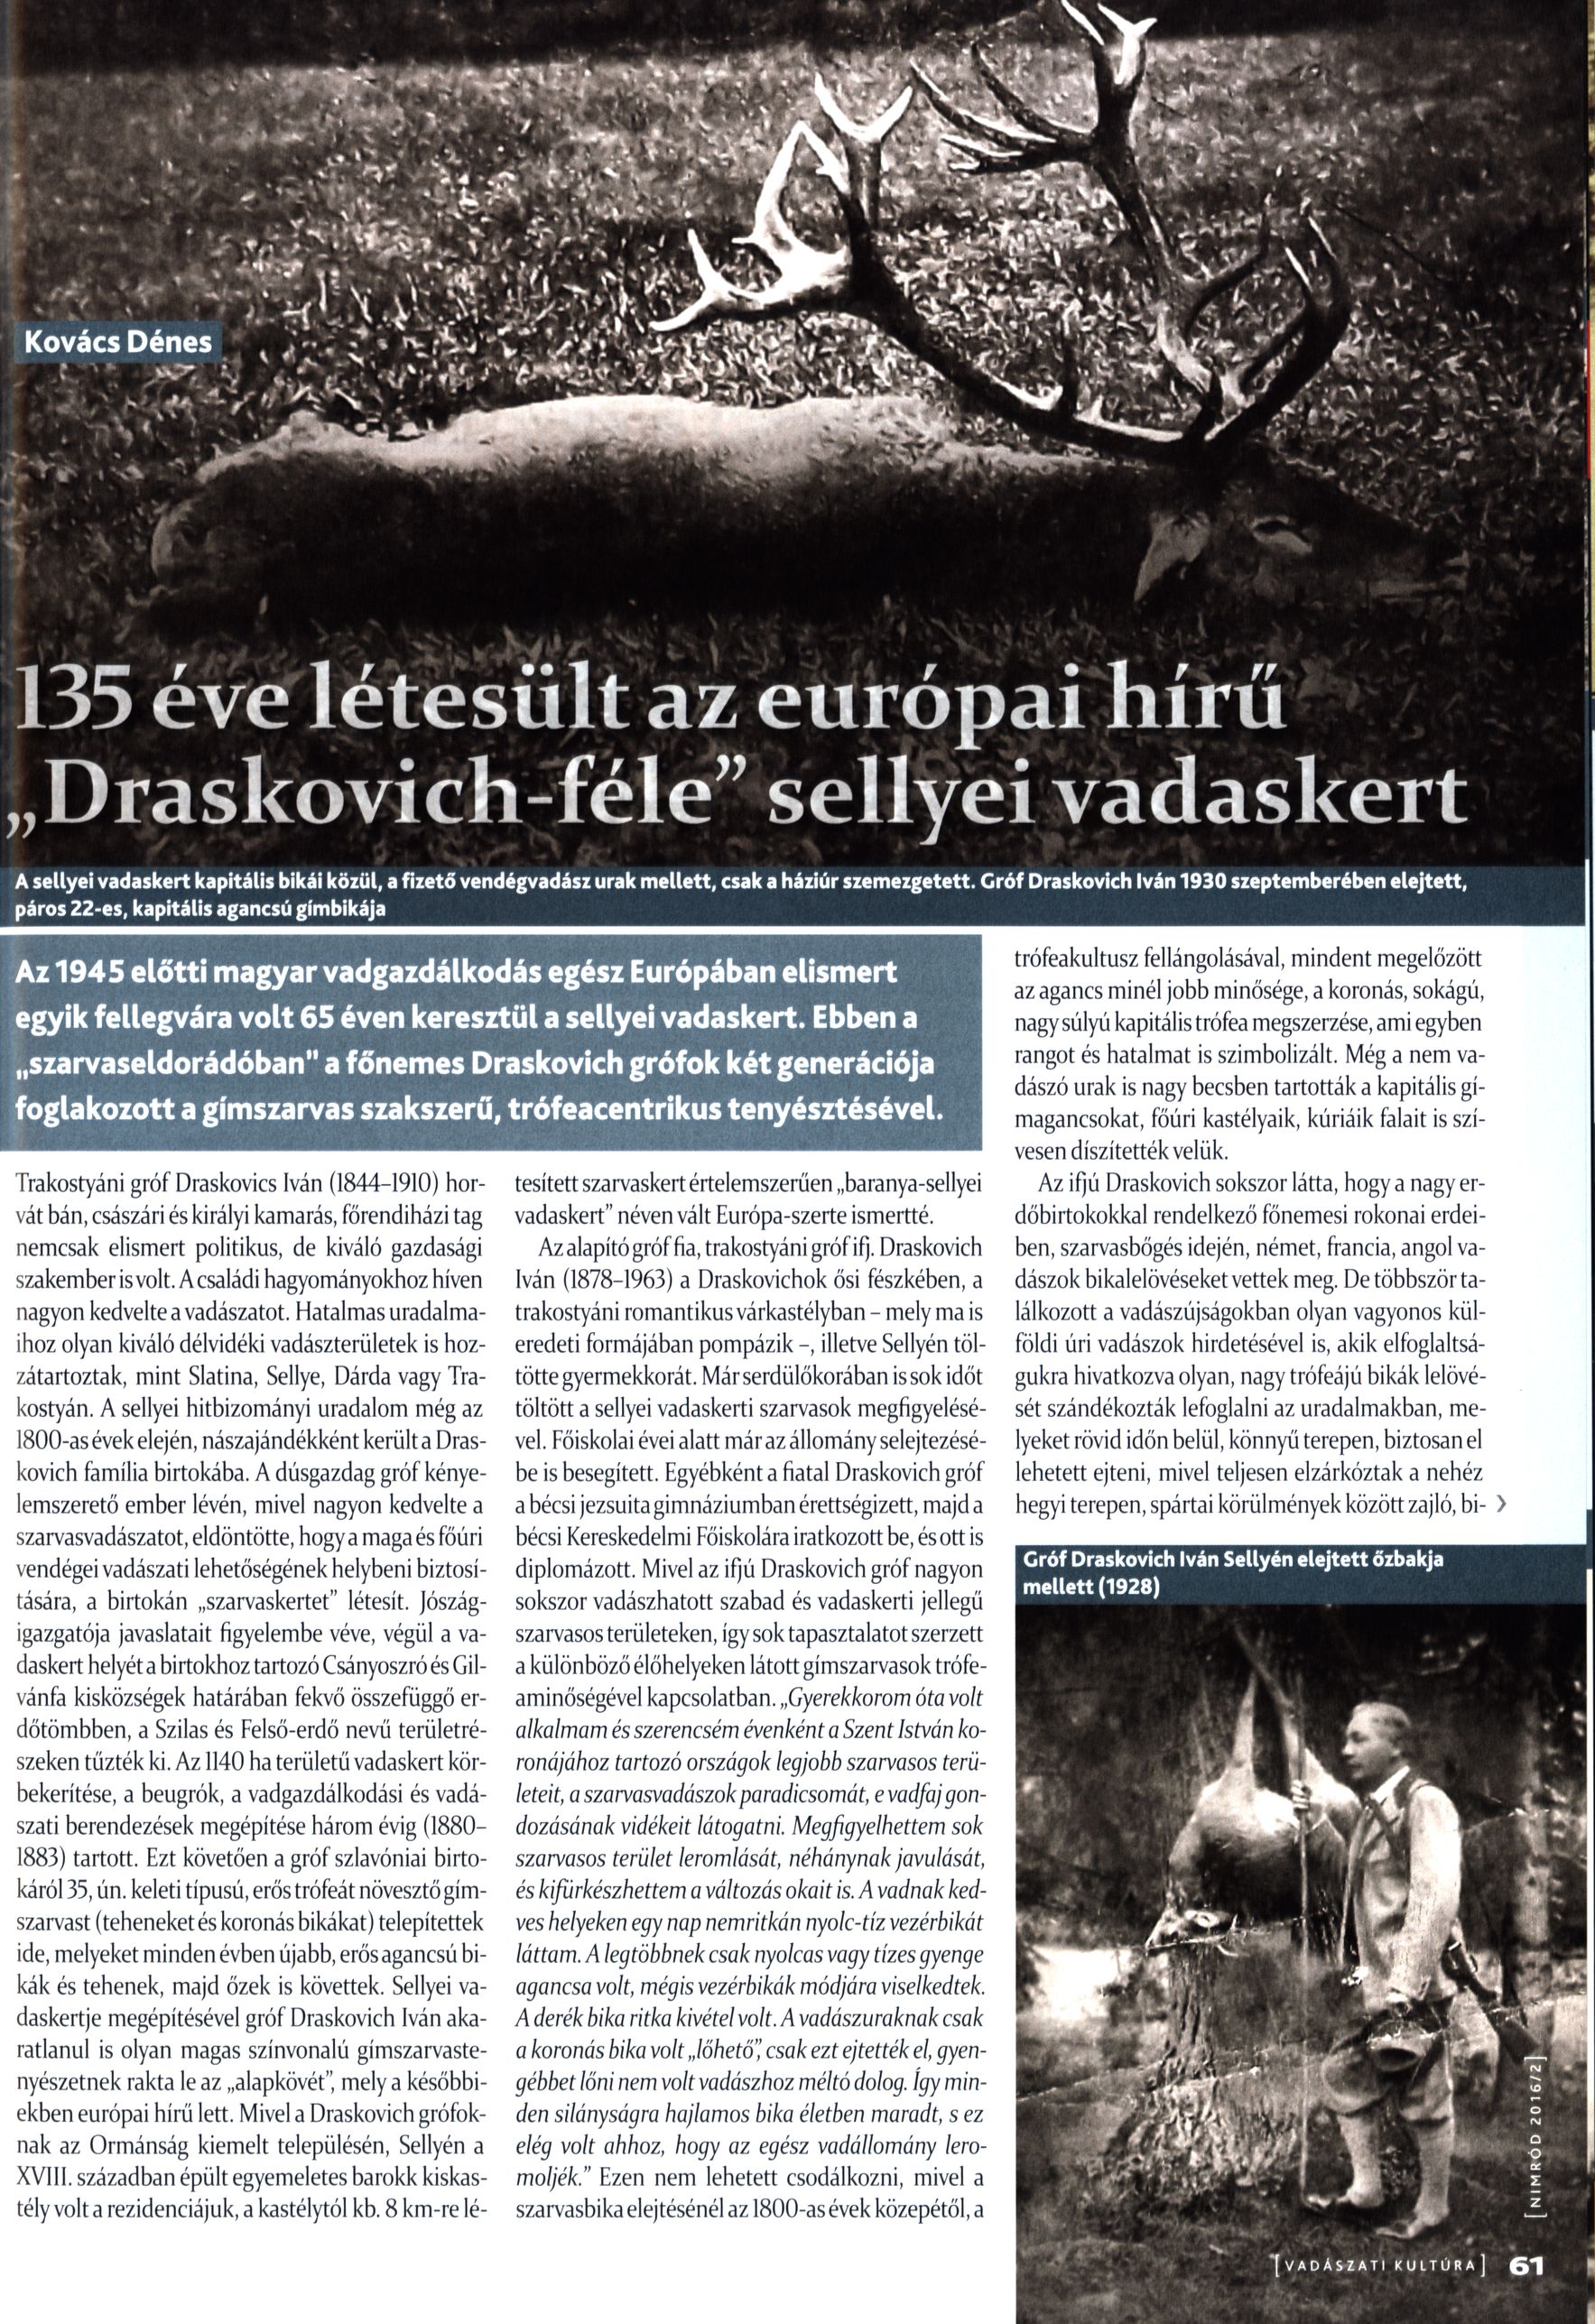 135 éve létesült a európai hírű "Draskovich-féle" sellyei vadaskert